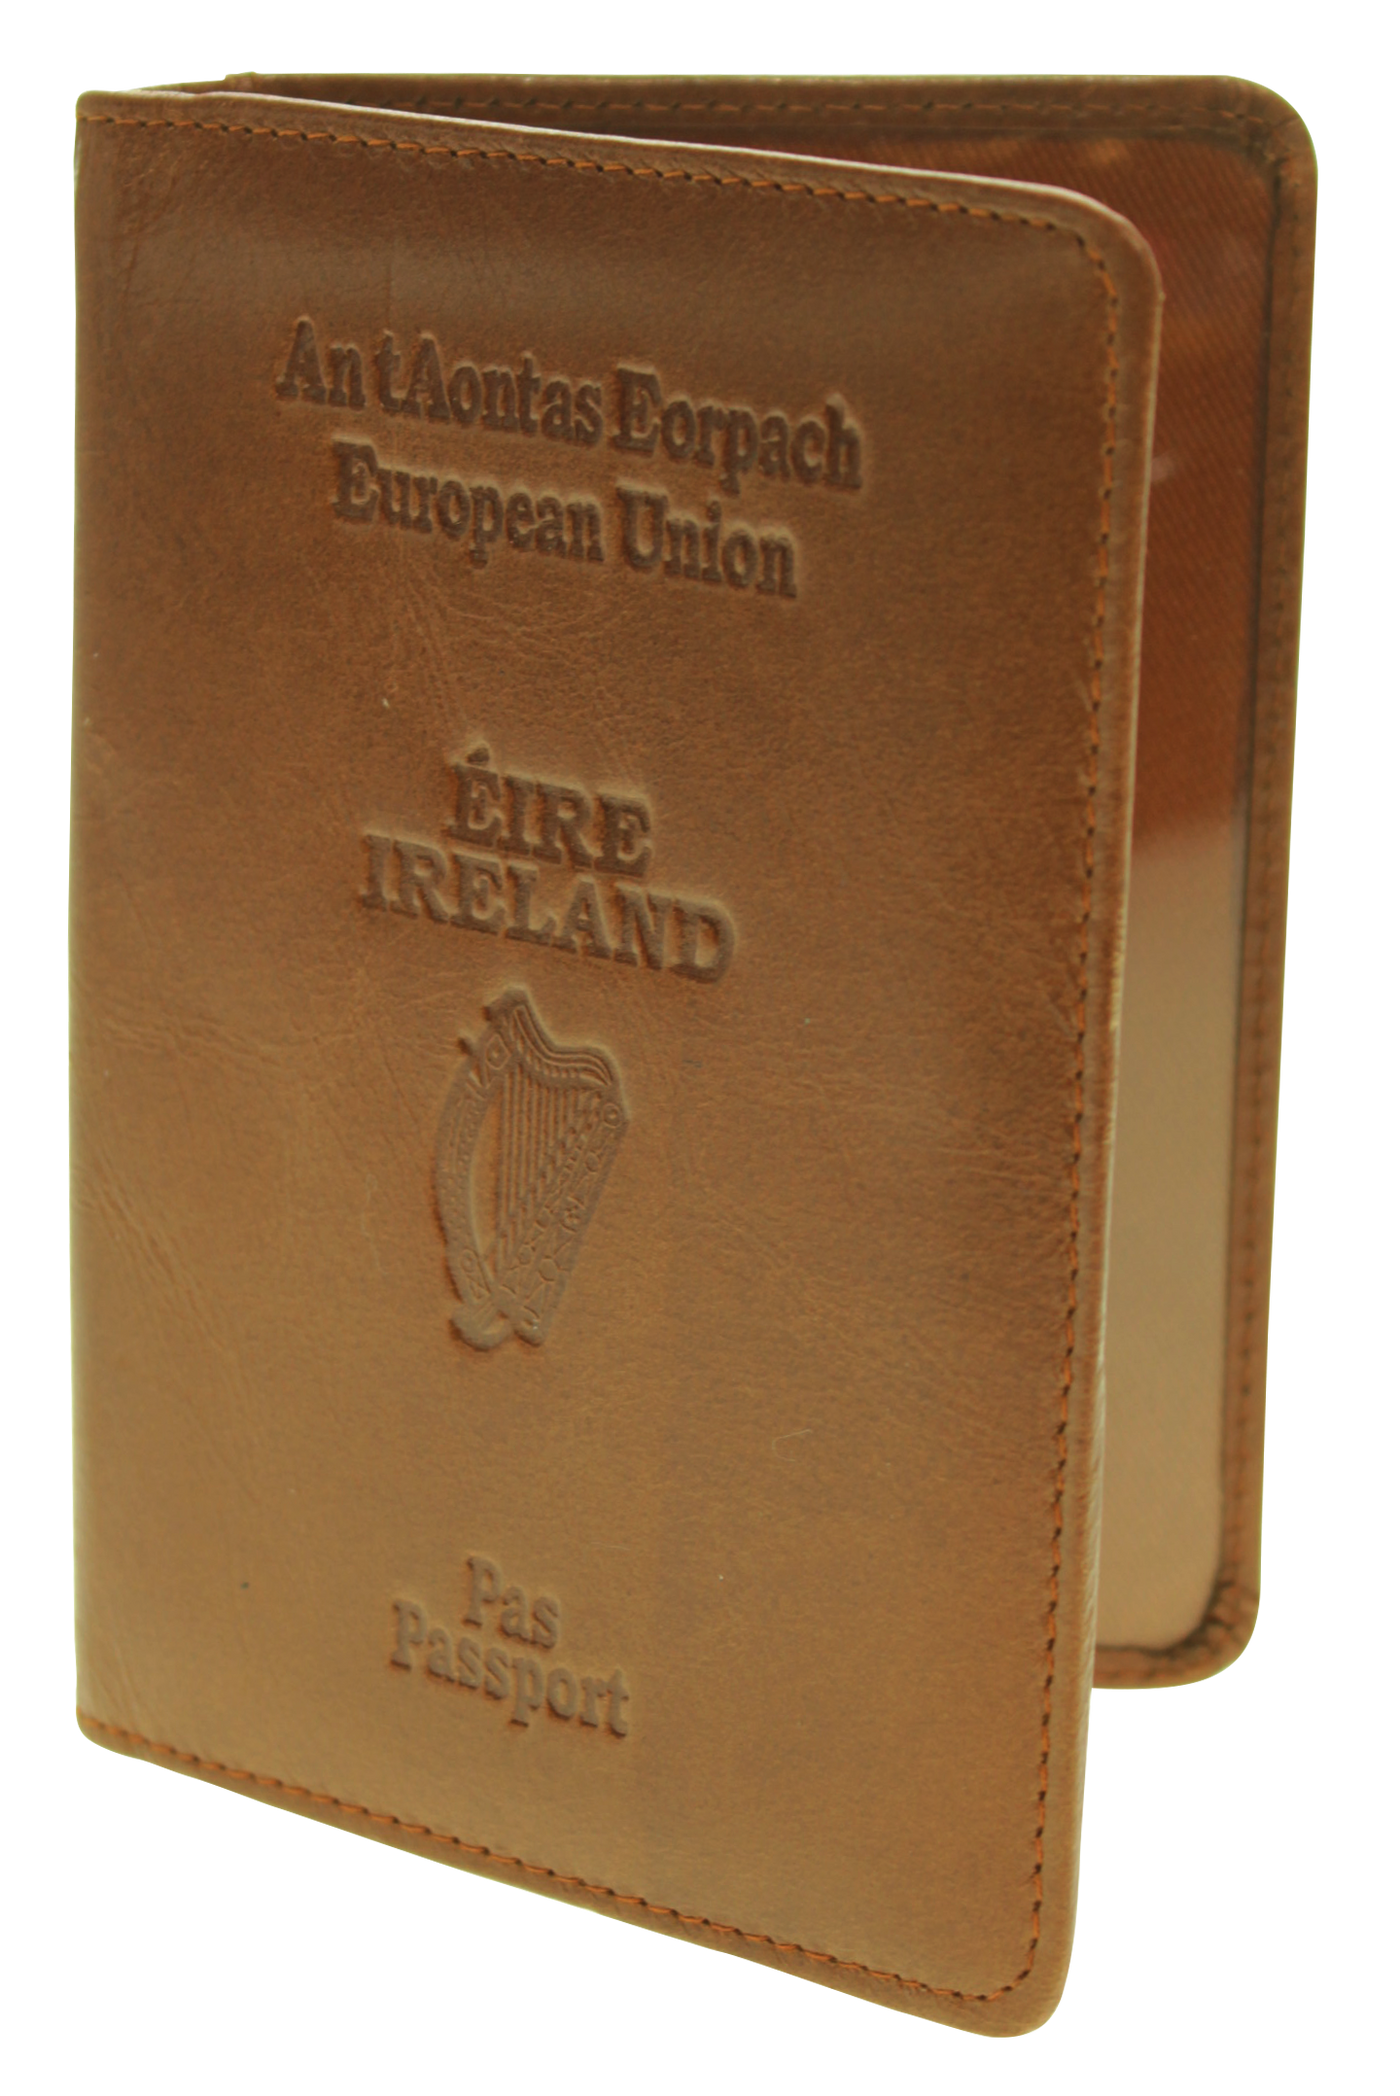 Personalised Irish Passport Holder - Top Unisex Gift 2023 - Tan Colour